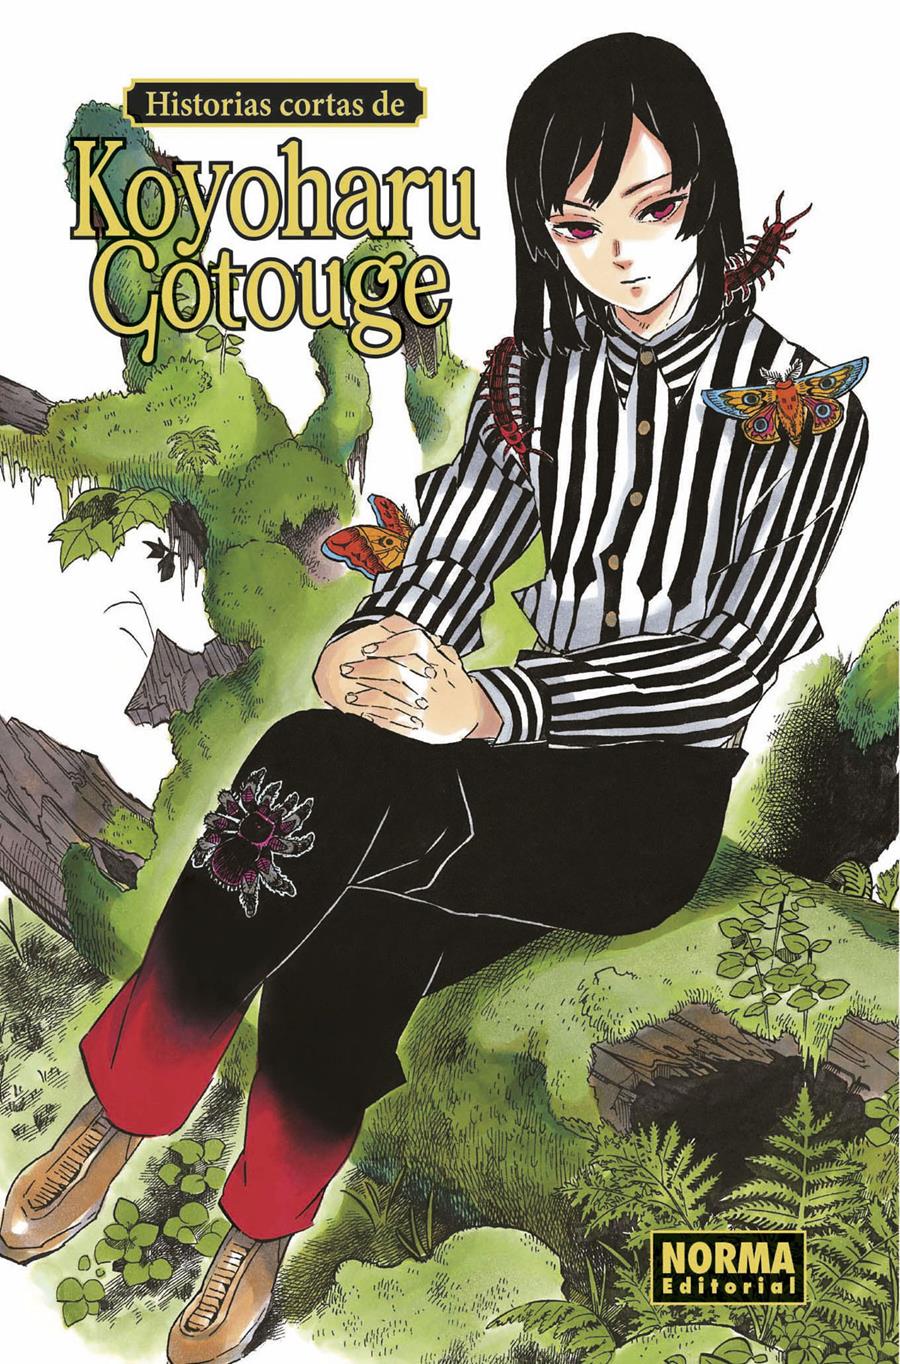 Historias de Koyoharu Gotouge | N1020-NOR34 | Koyoharu Gotouge | Terra de Còmic - Tu tienda de cómics online especializada en cómics, manga y merchandising